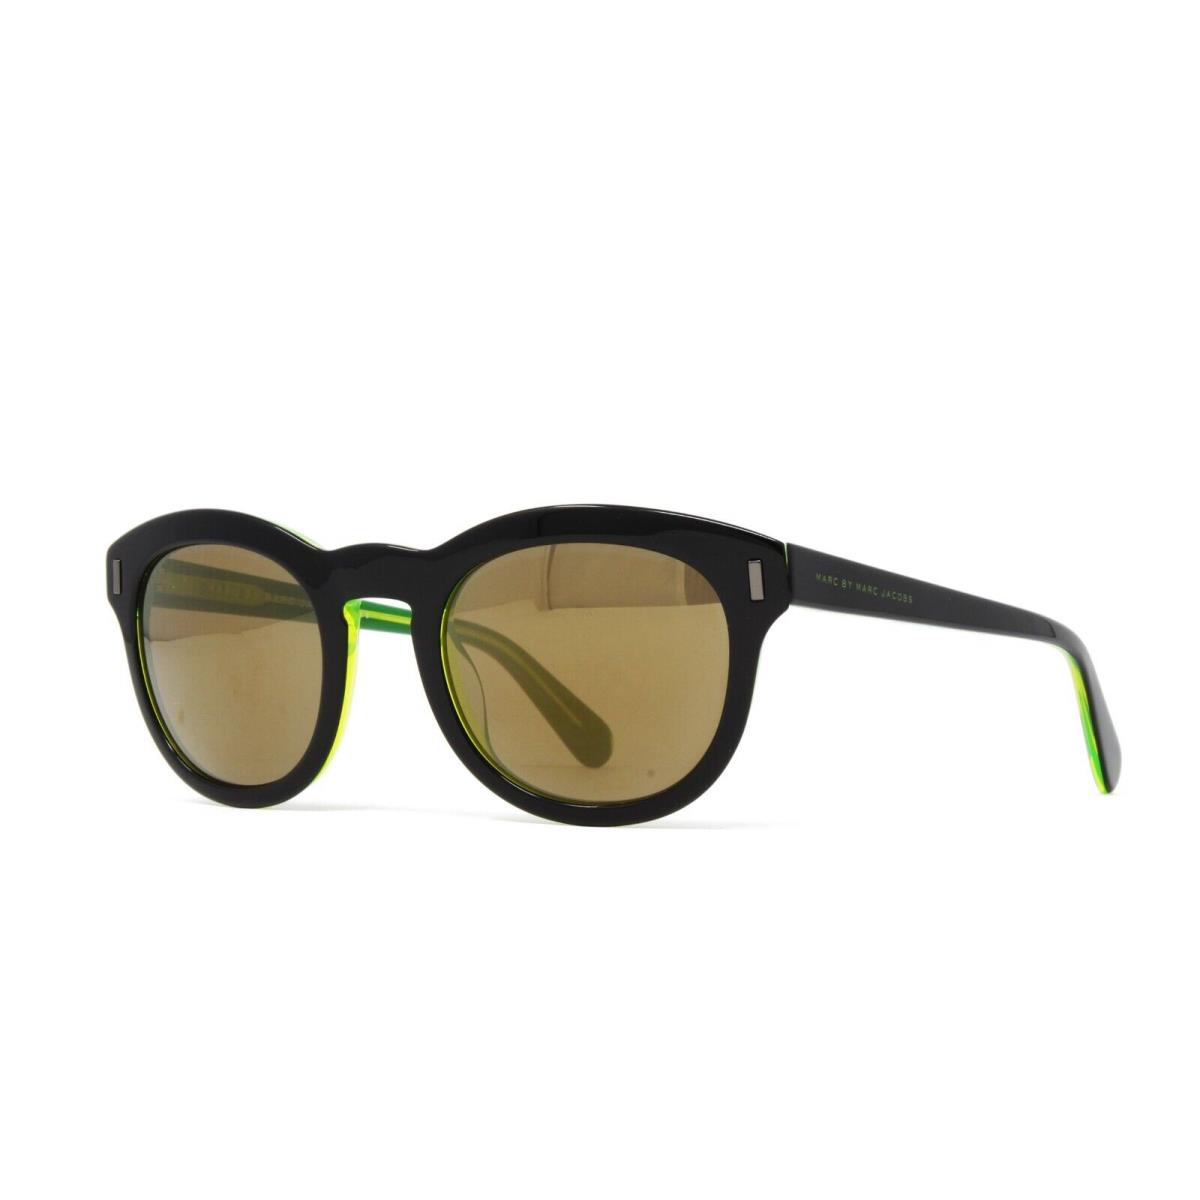 Marc by Marc Jacobs Women`s Round Sunglasses MMJ433S/07ZJ Black Green 49mm - Frame: Black, Lens: Brown